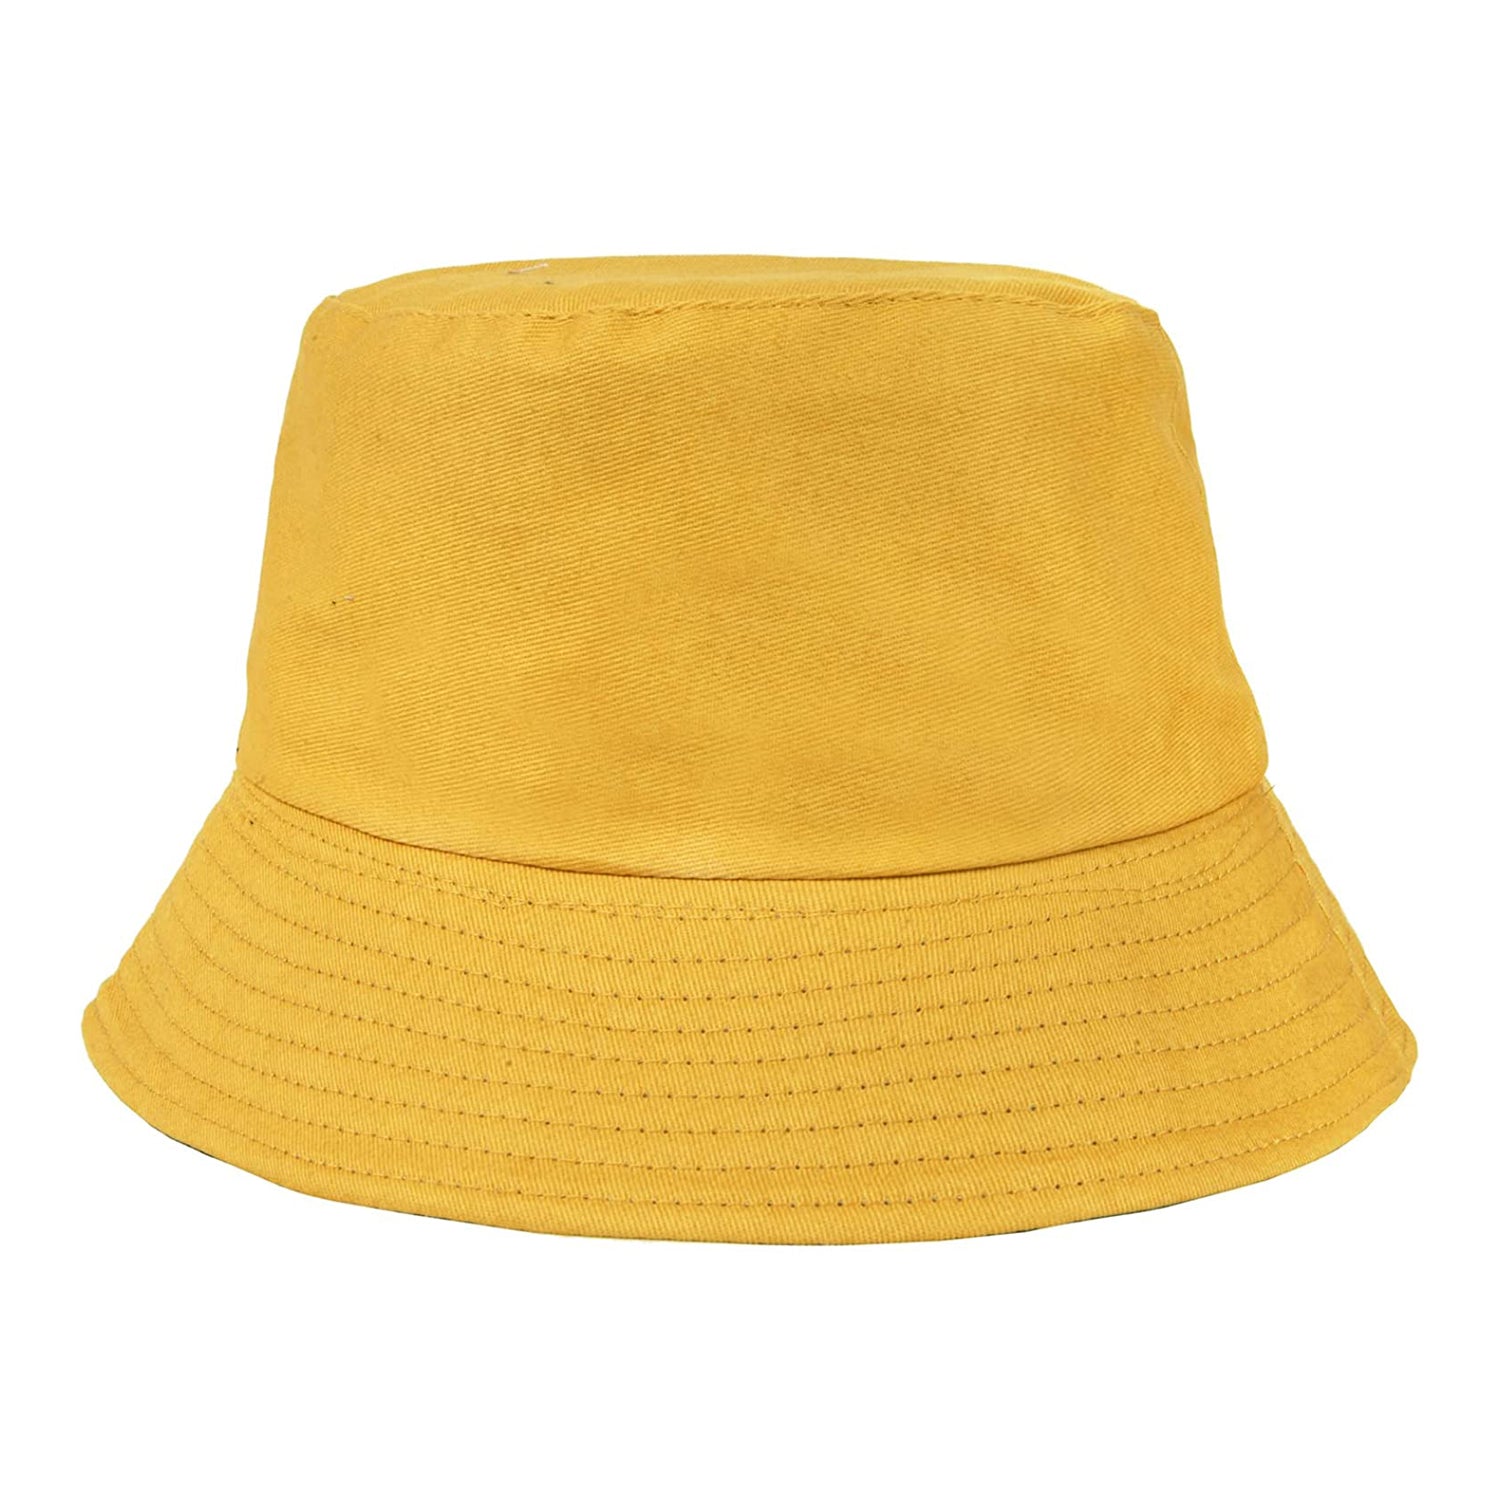 TOPONE ACCESSORIES LIMITED Custom Fisherman Travel Beach Outdoor Sun Protection Reversible Bucket Hat Topone Accessories Ltd. 